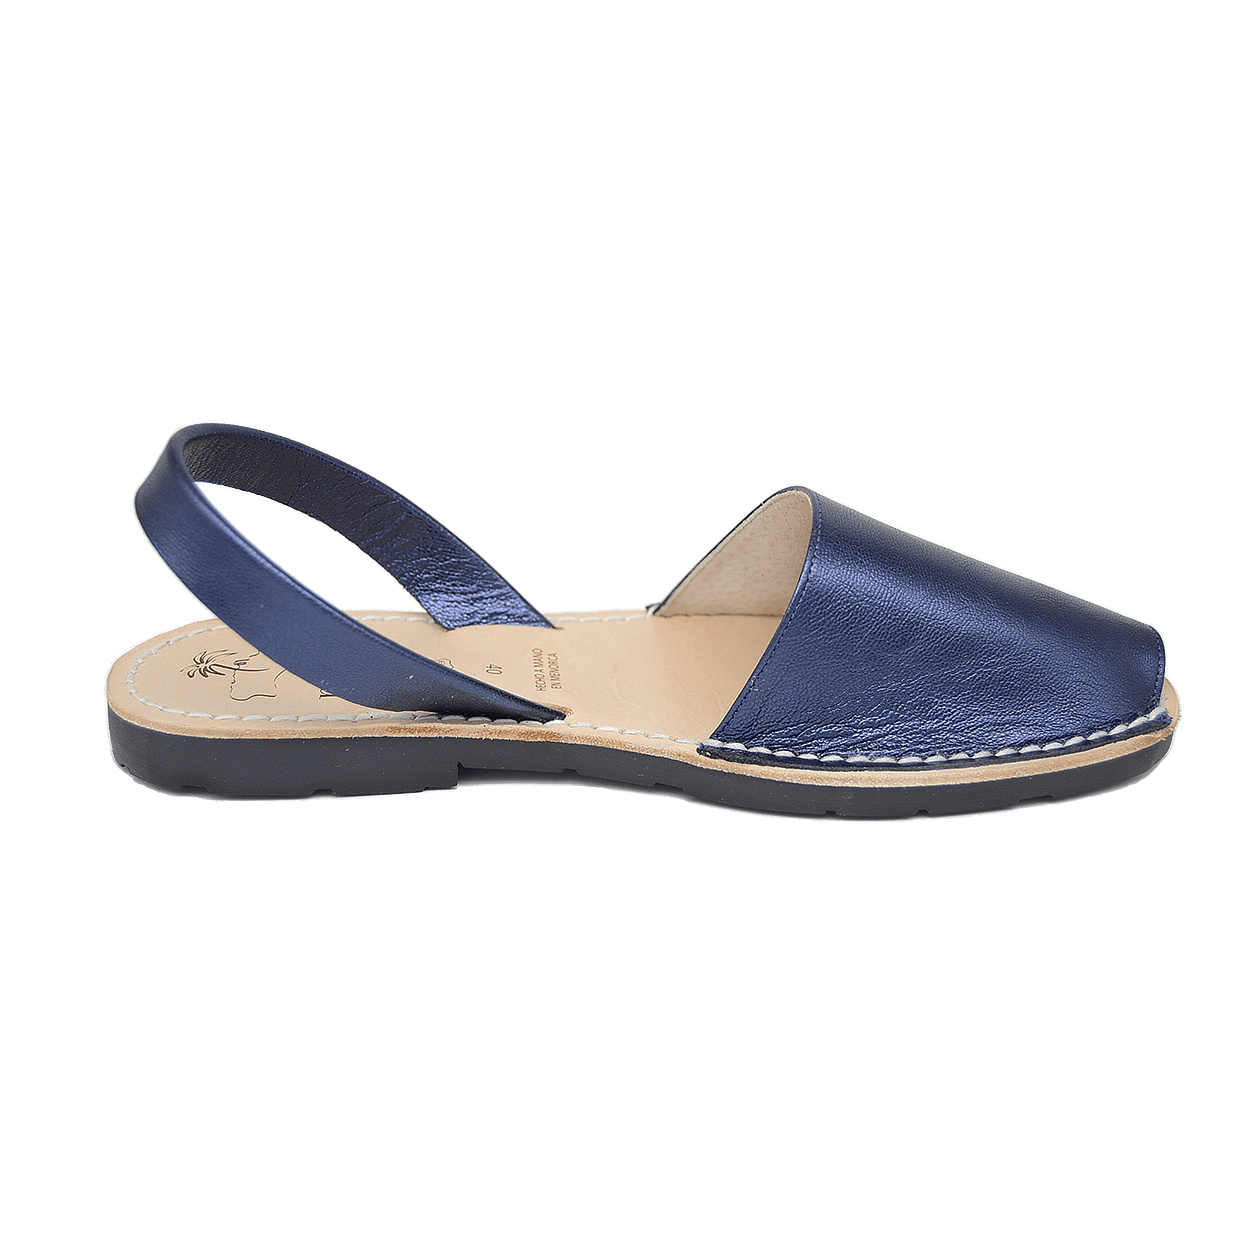 Sandale AVARCA din piele naturala - Albastru Sidefat Mibo AvarcaShop.ro